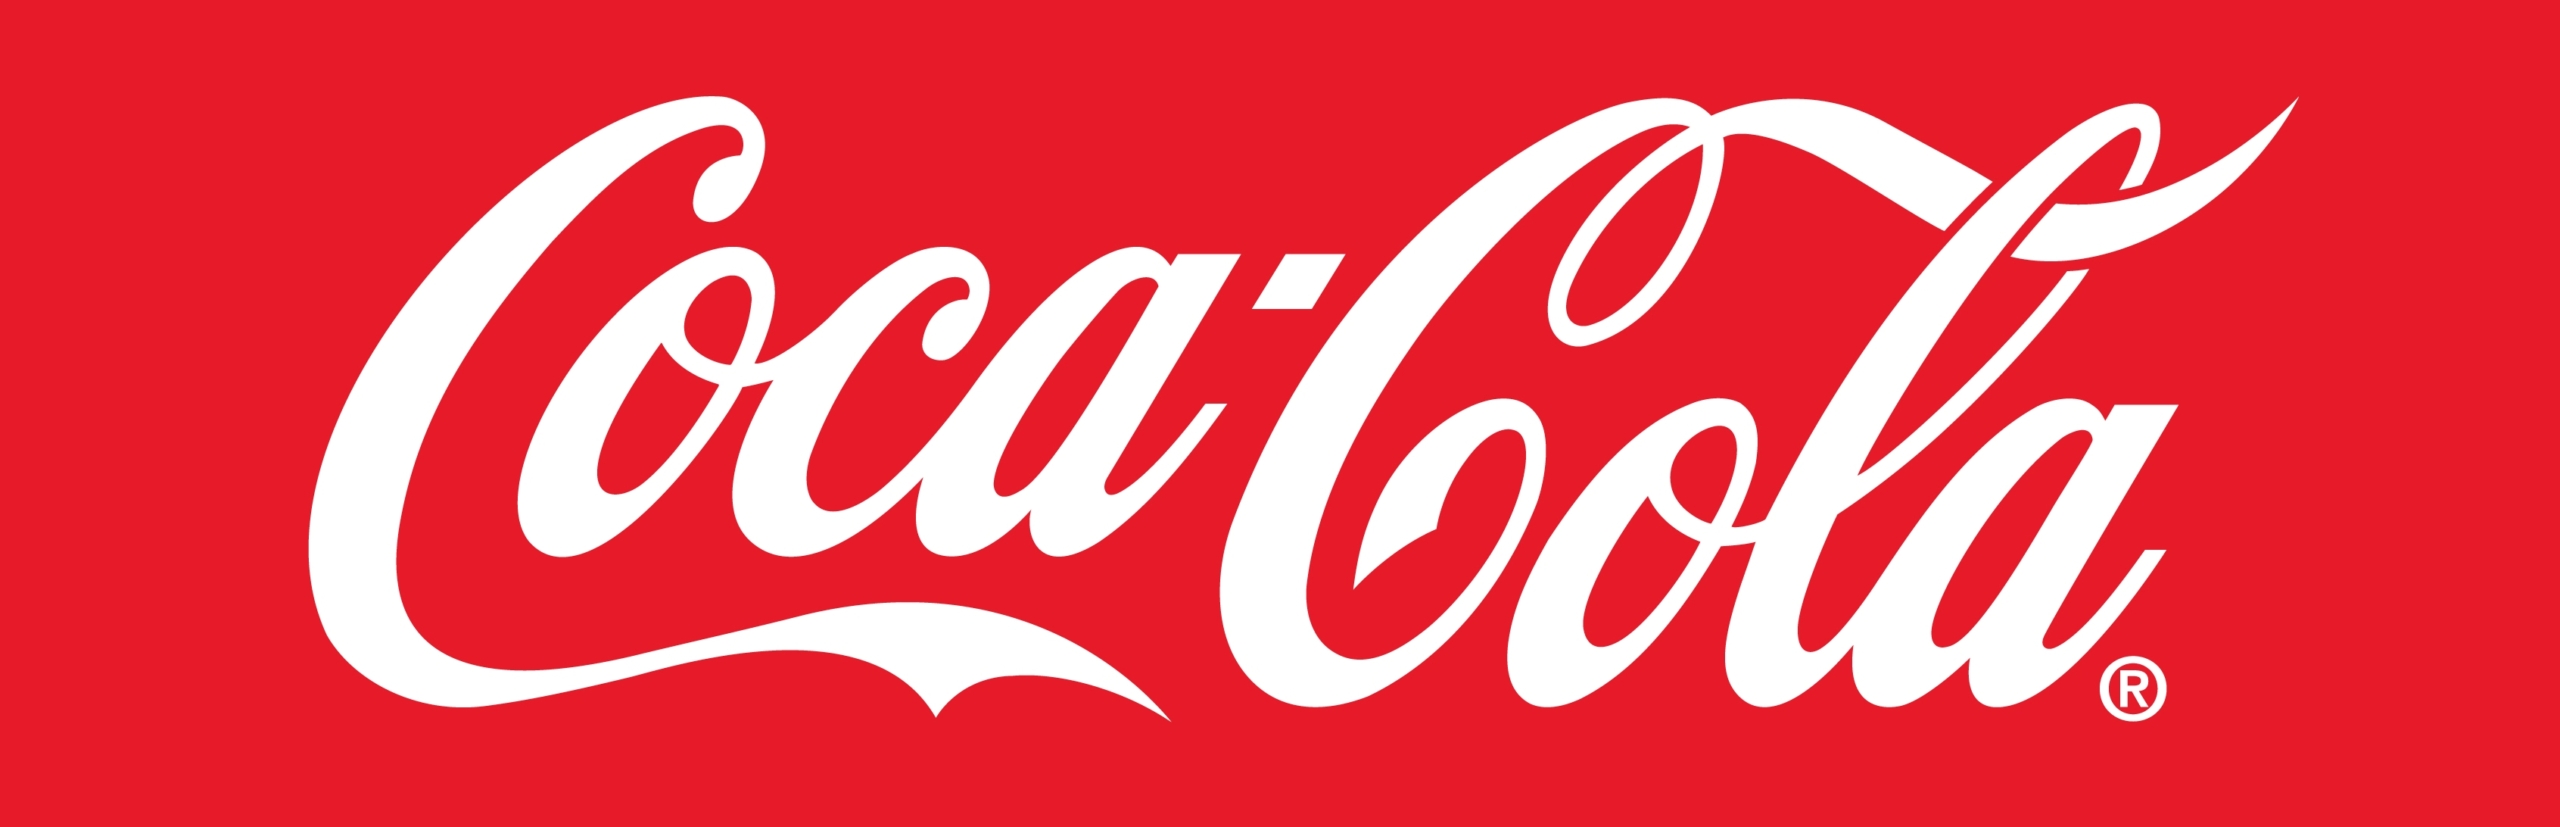 logo-coca-cola2